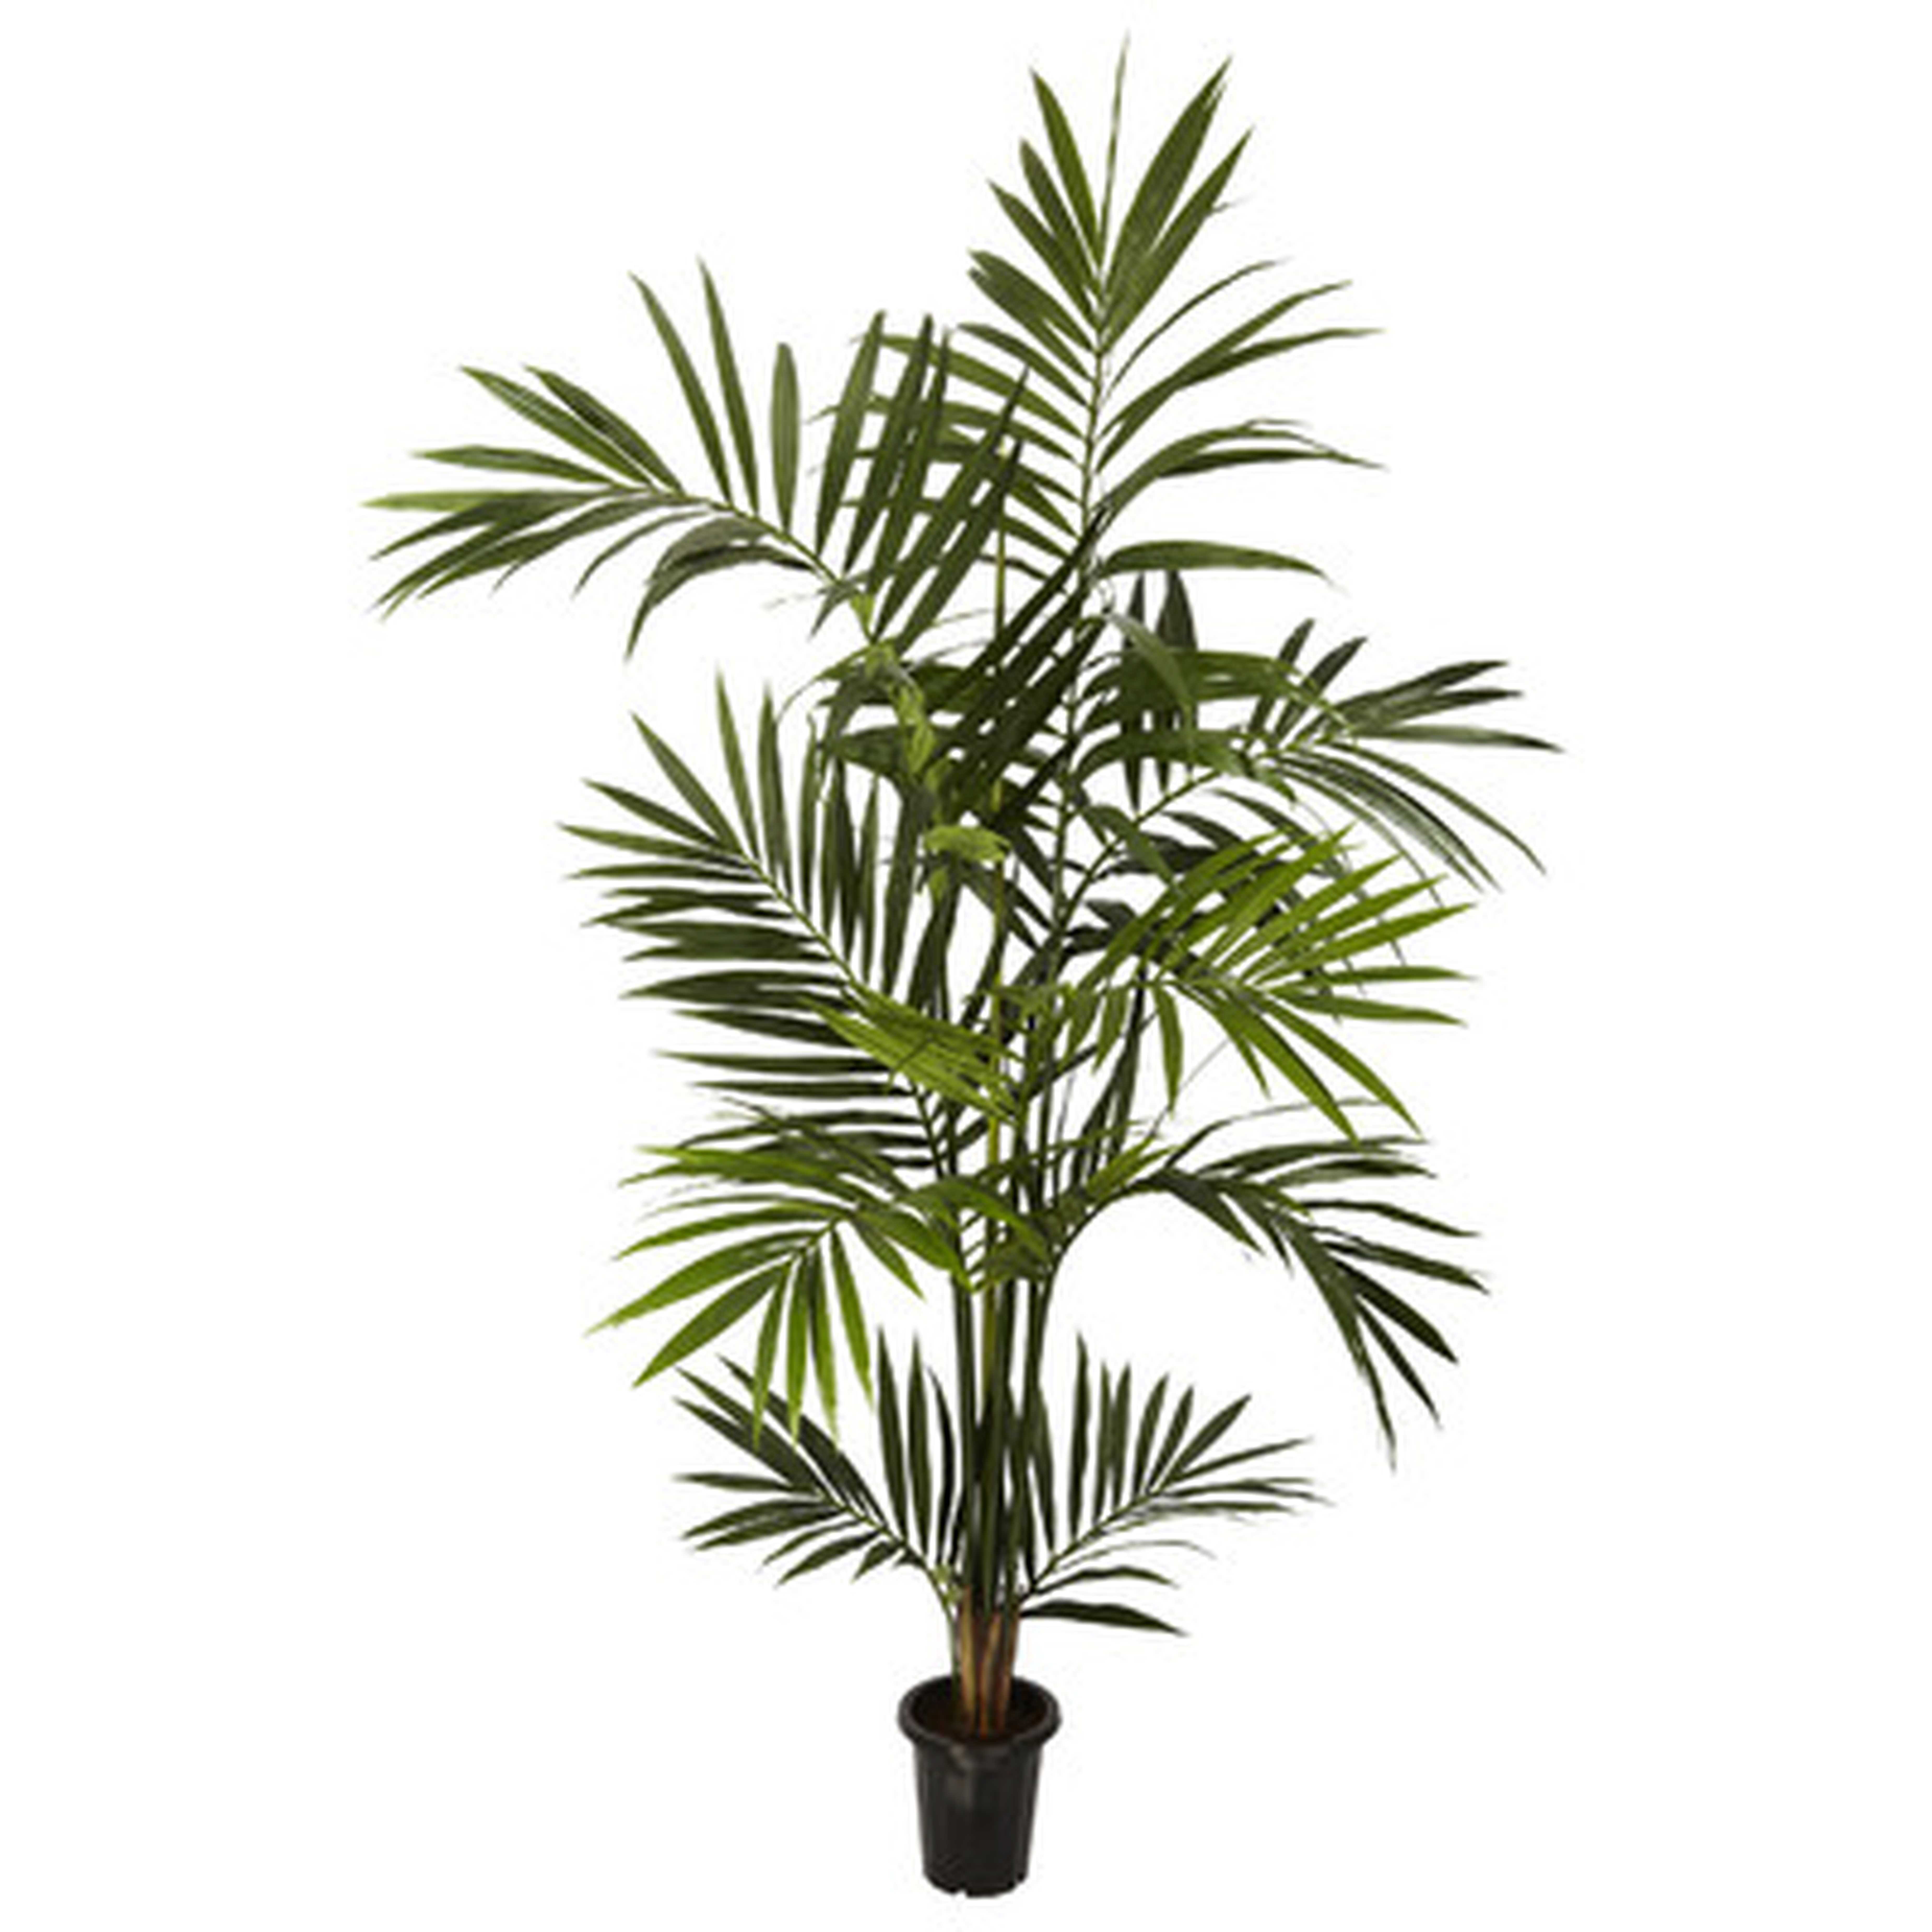 "Kentia Palm Tree in Pot" - Wayfair